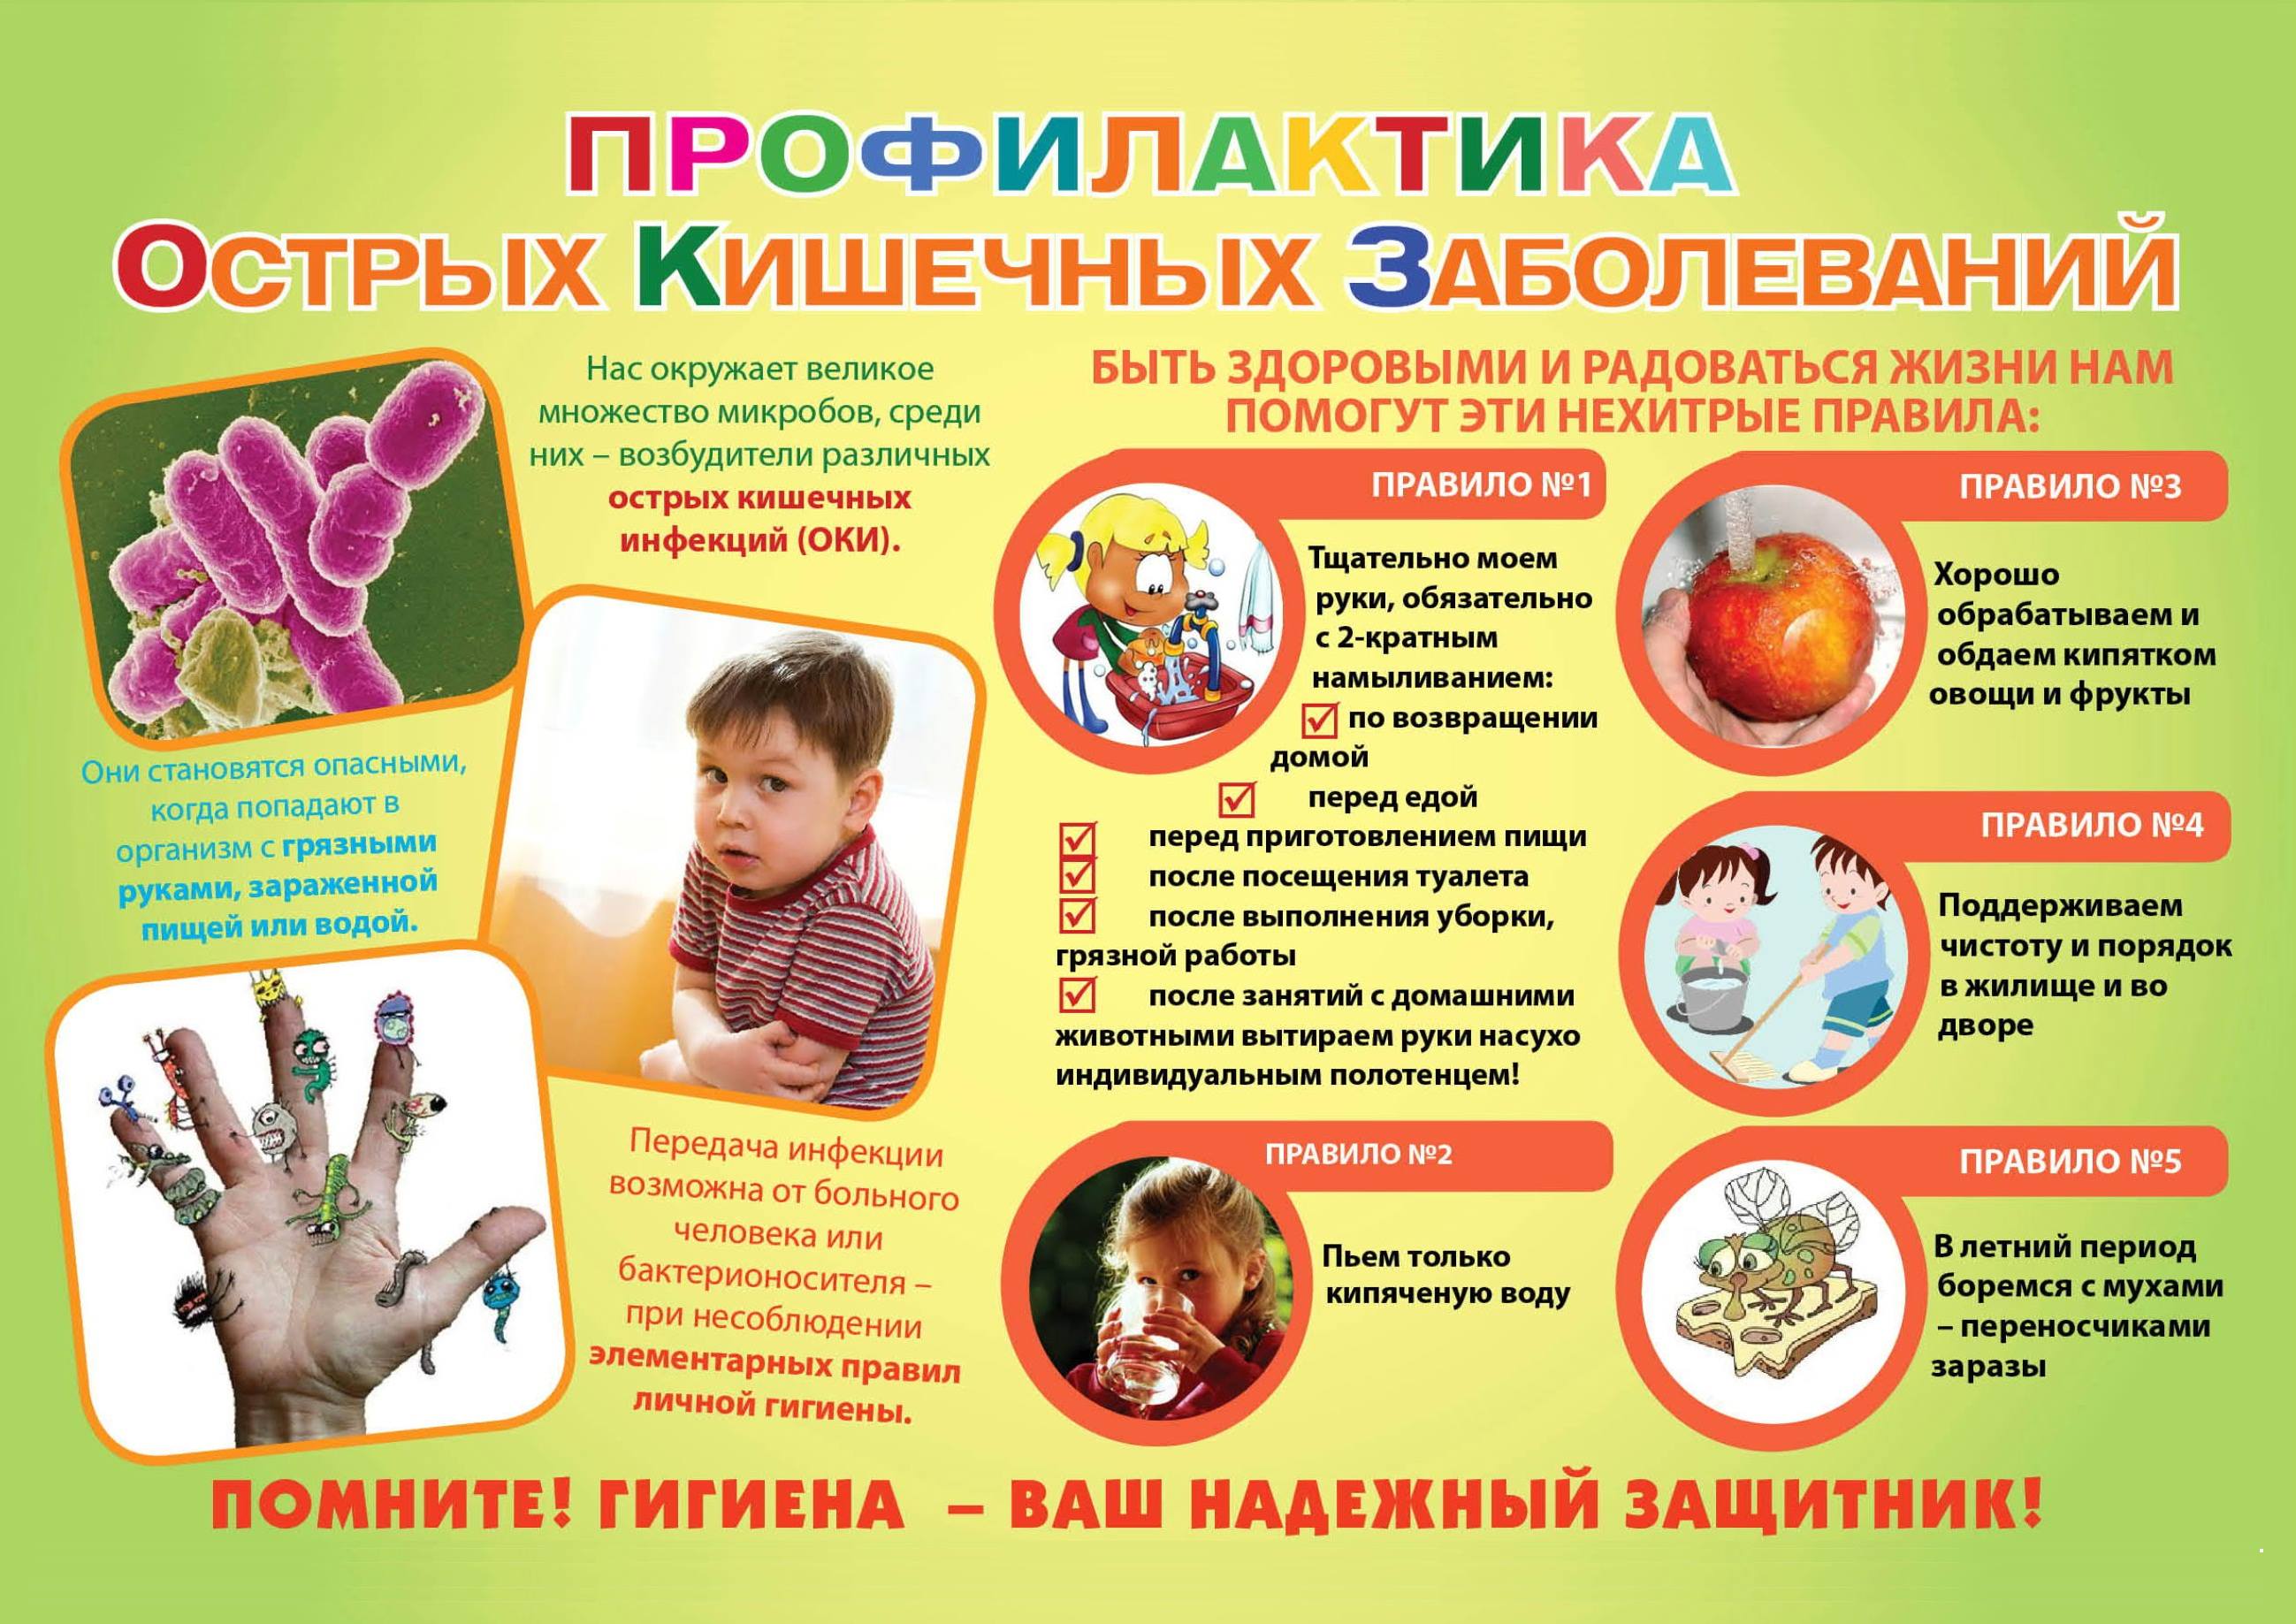 http://www.gbanapa.ru/images/profilaktika/listovka-profilaktika-oki.jpg